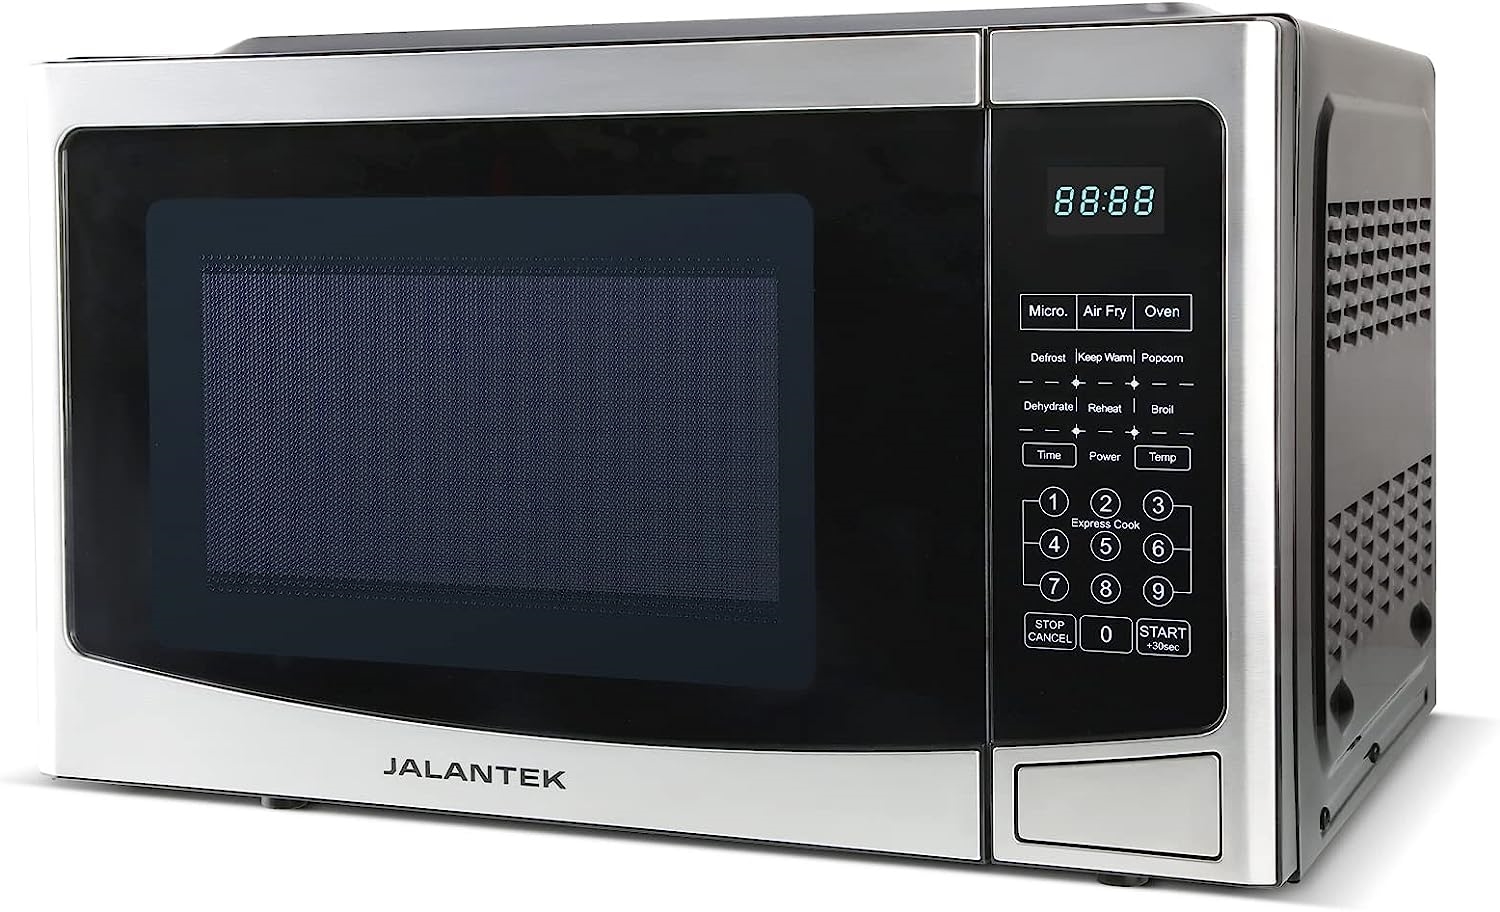 JALANTEK Microwave Toaster Oven | DeviceDaily.com